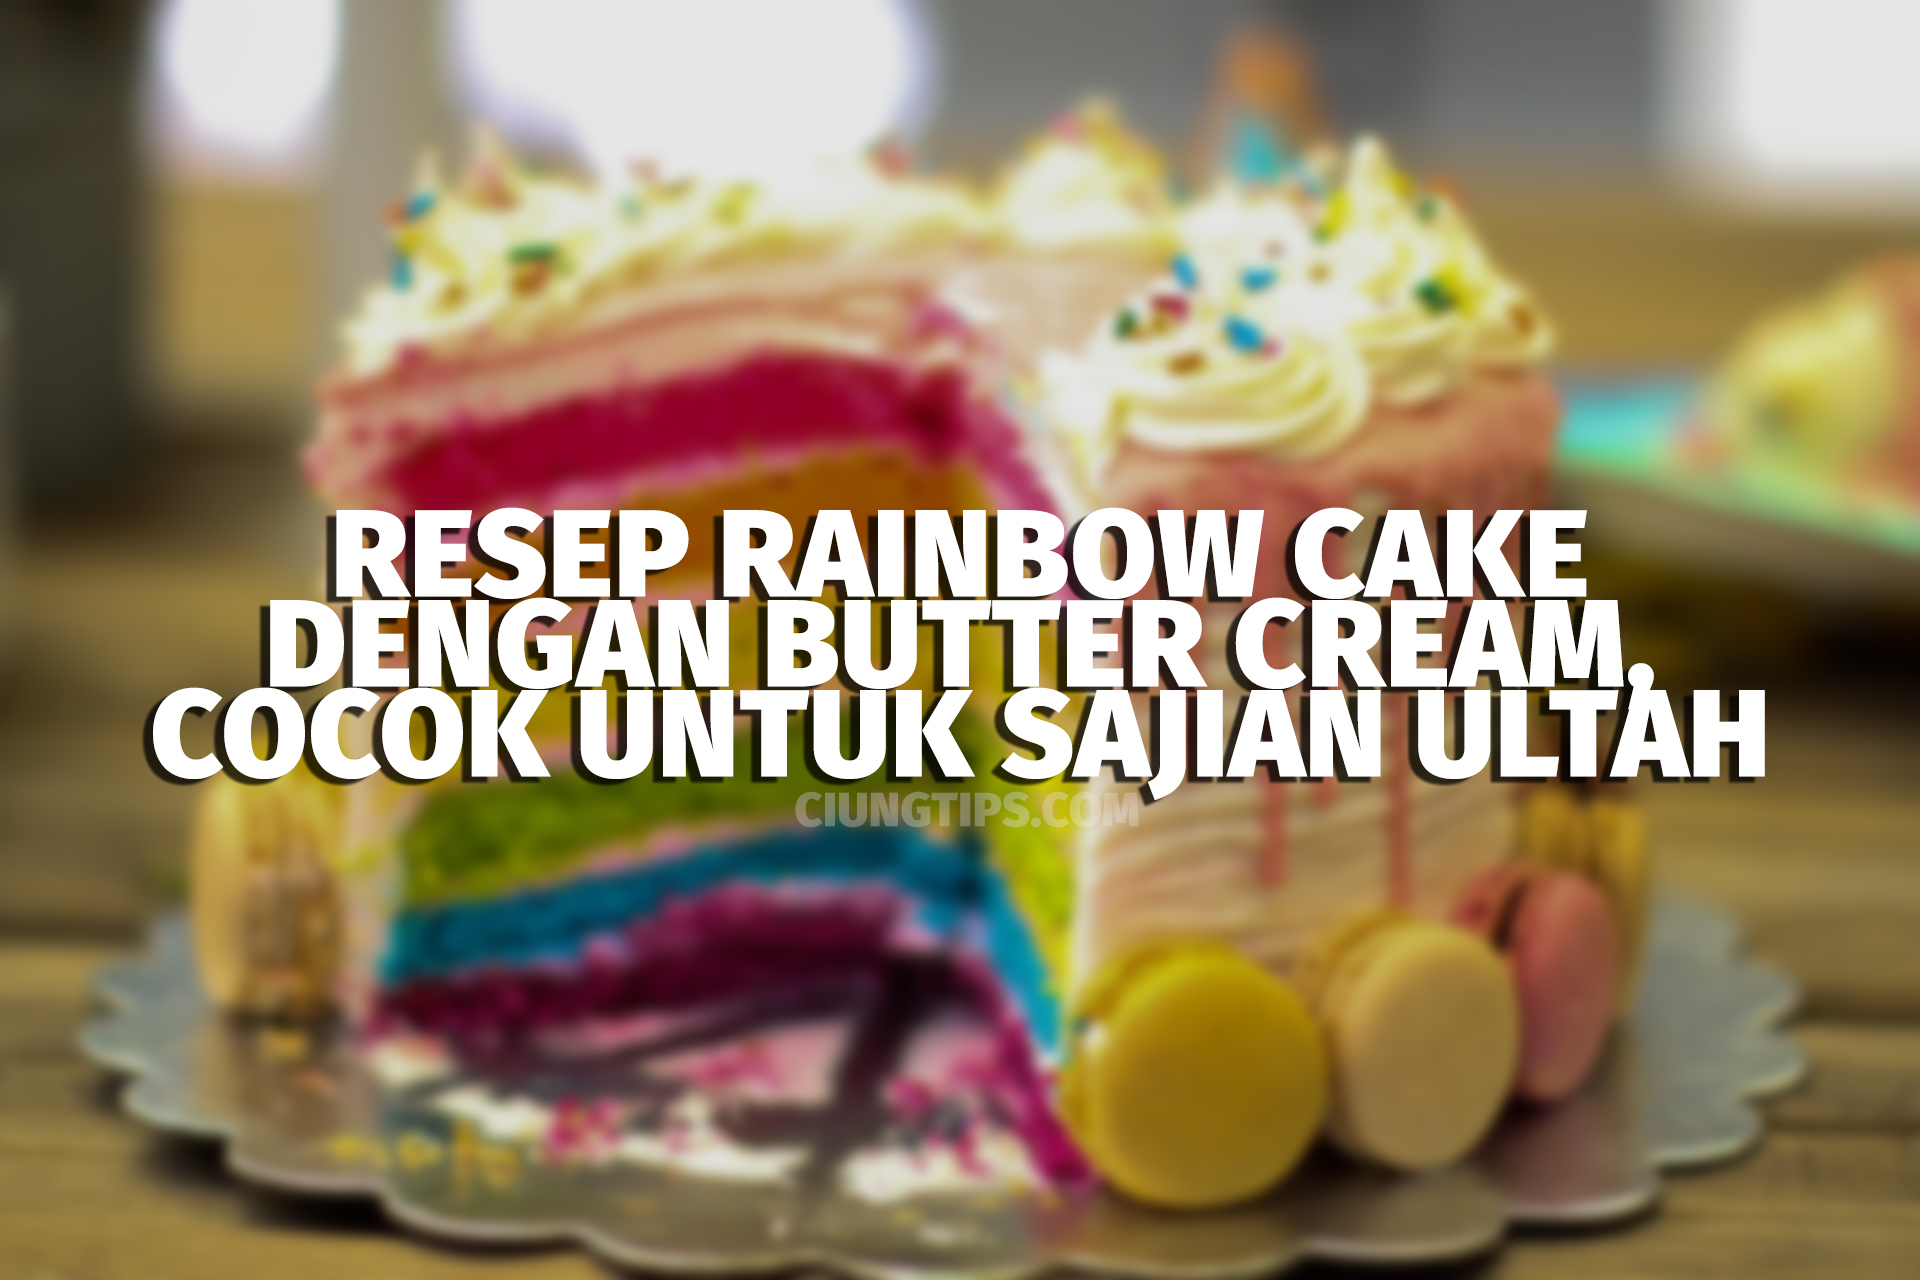 Resep Rainbow Cake untuk Sajian Ultah